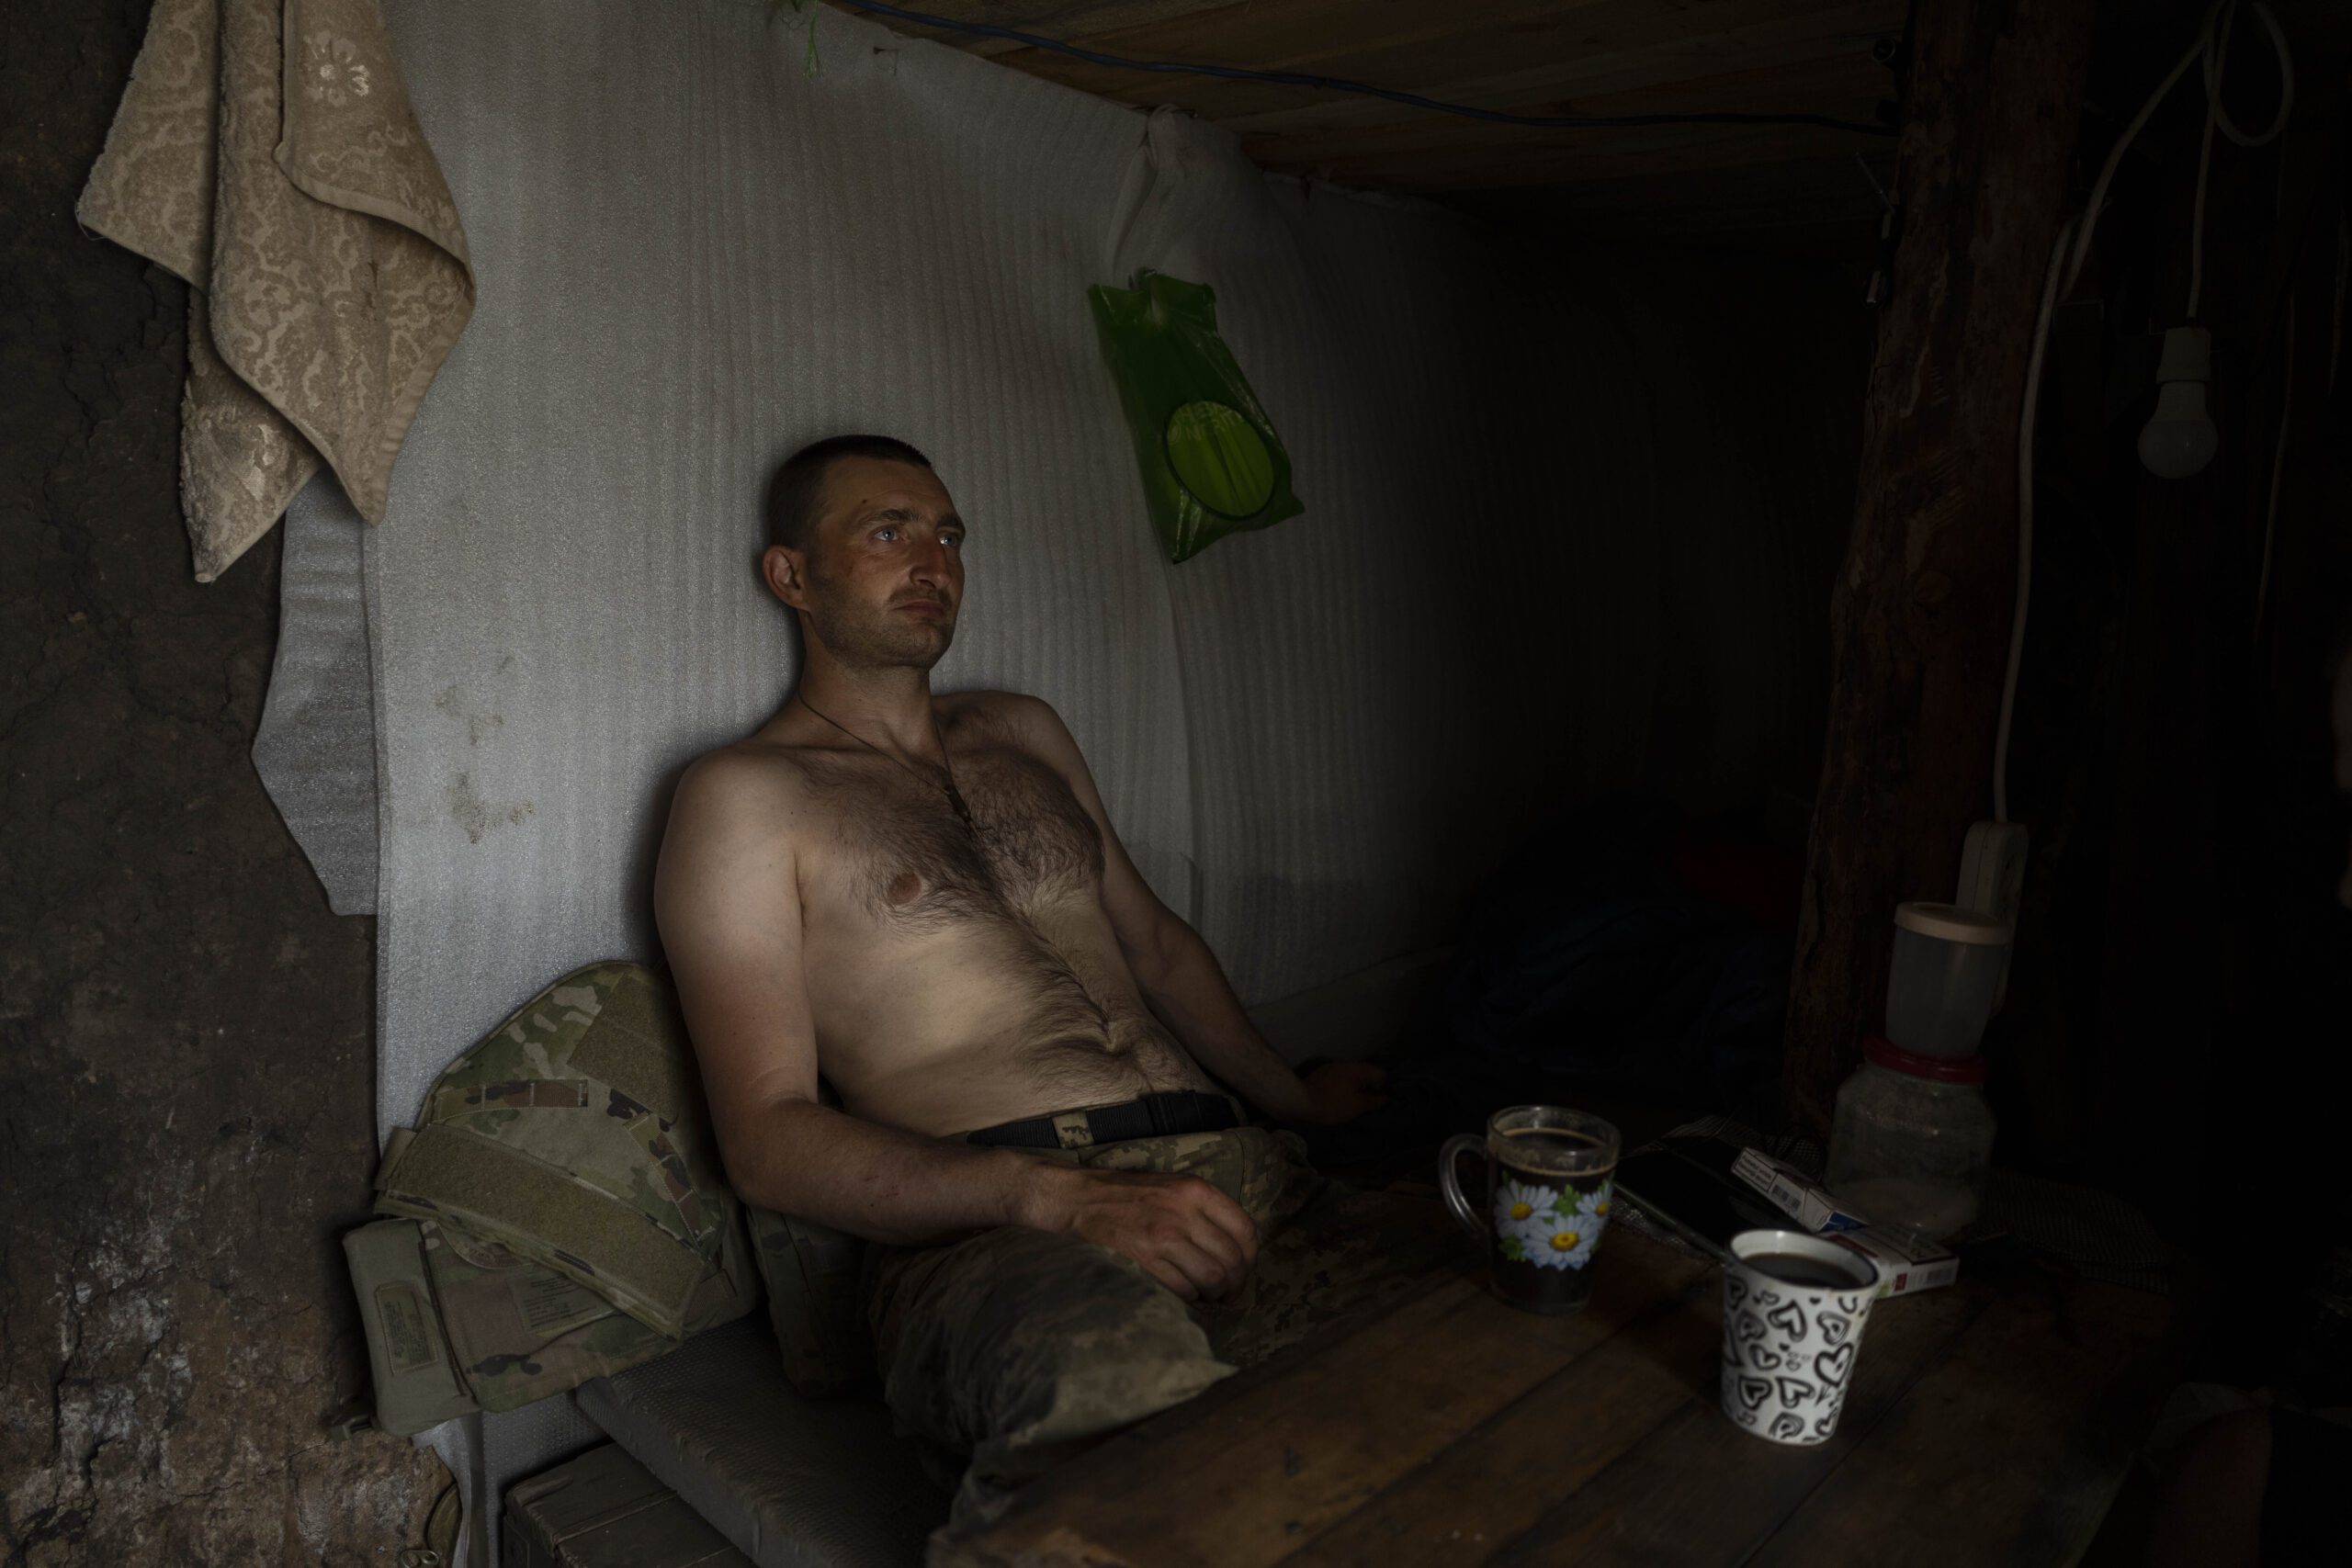 Russia Ukraine War Two Weeks Photo Gallery